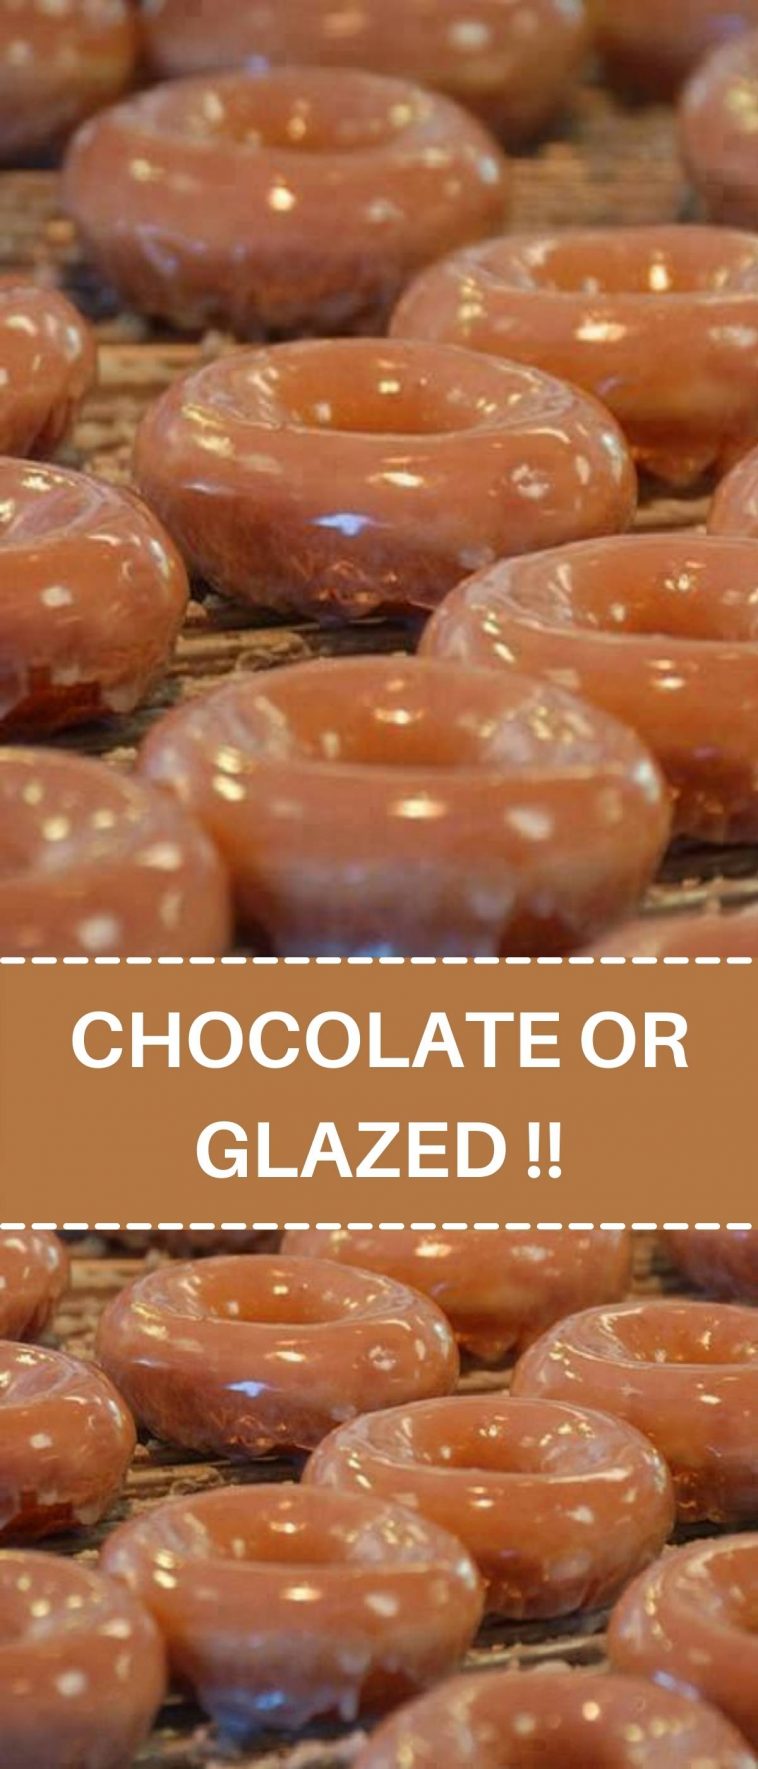 KRISPY KREME – CHOCOLATE OR GLAZED !!